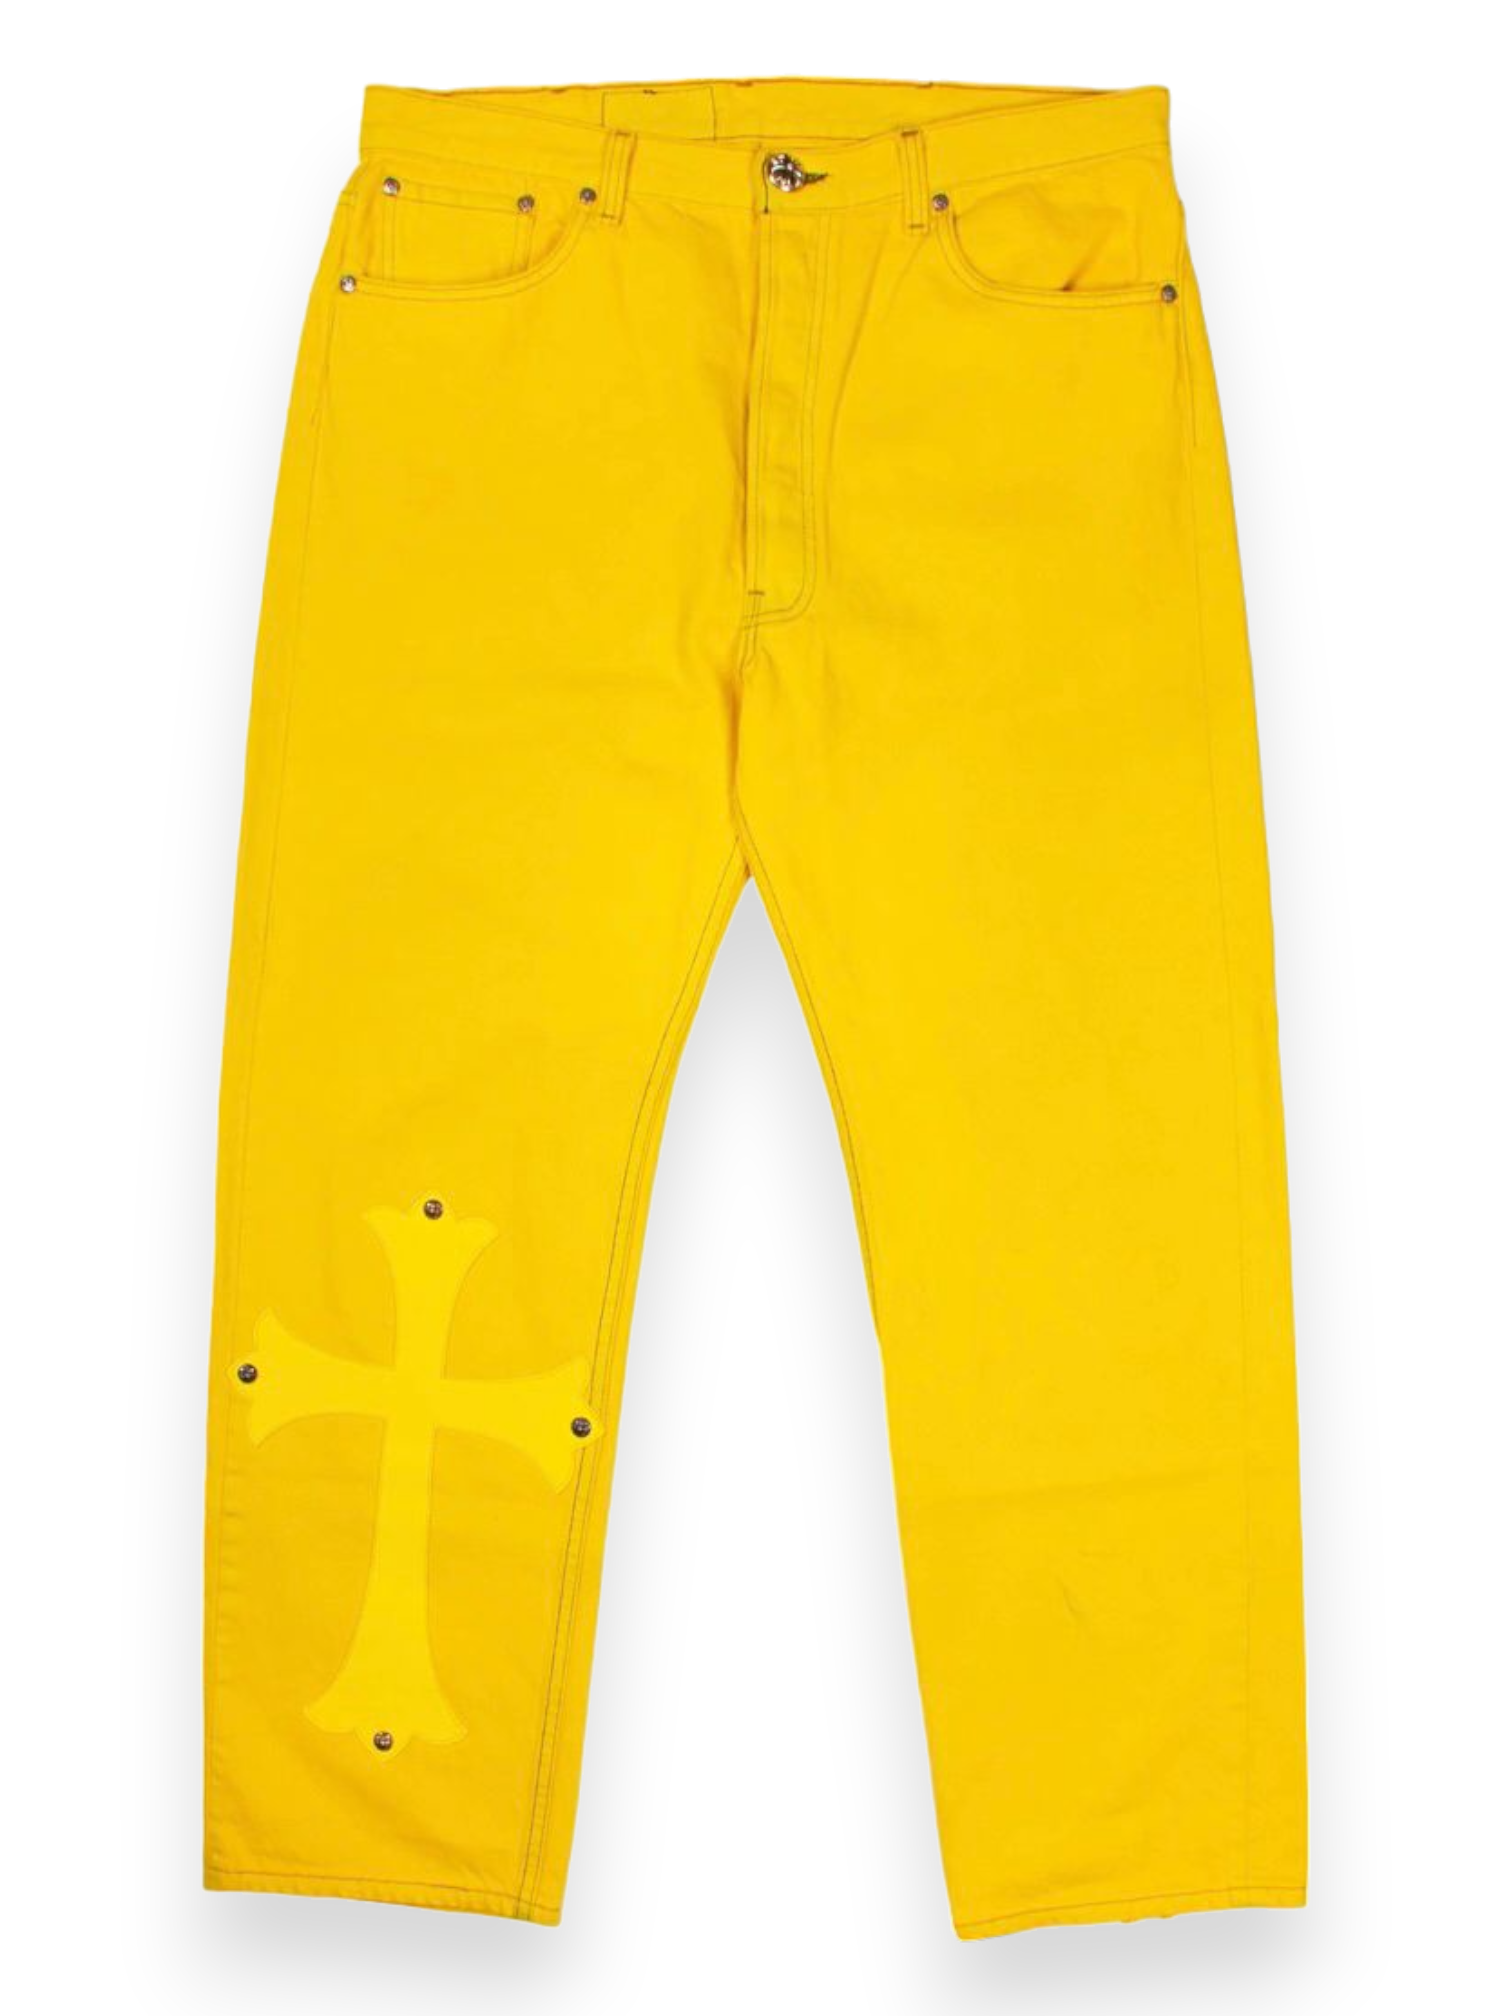 Chrome Hearts Yellow Cross Patch Levi’s Denim Jeans